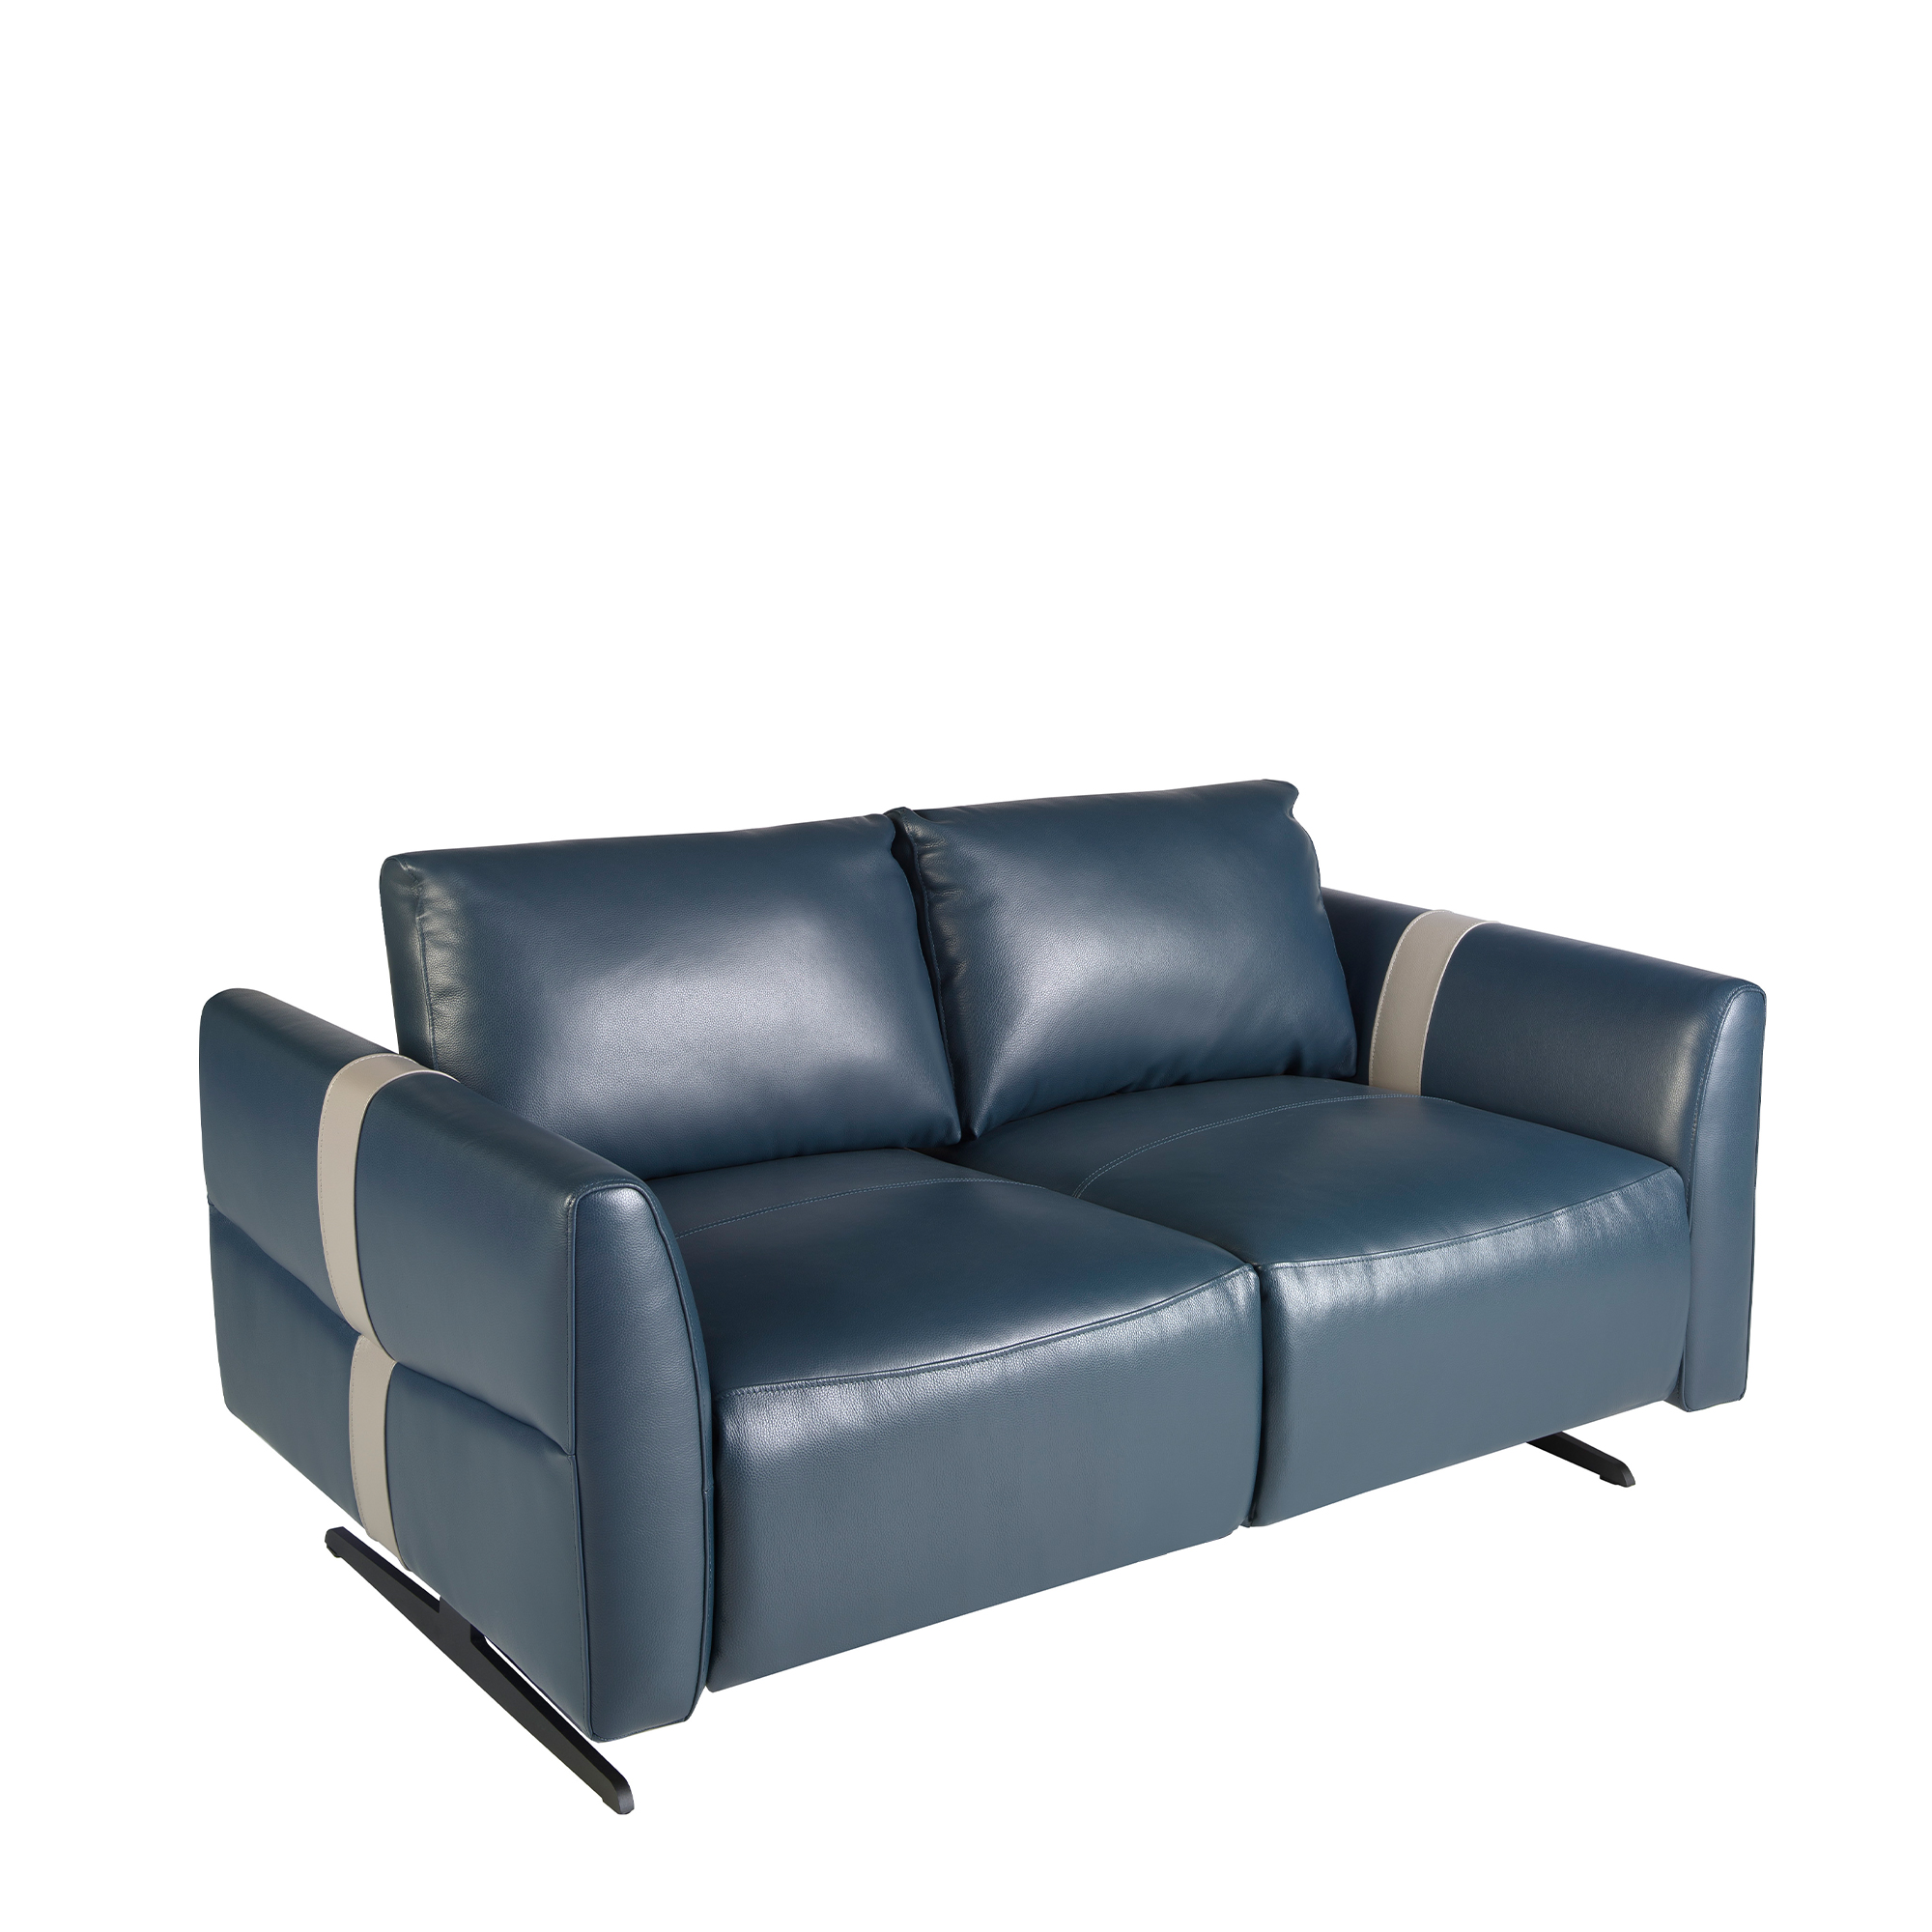 2 seater blue leather sofa